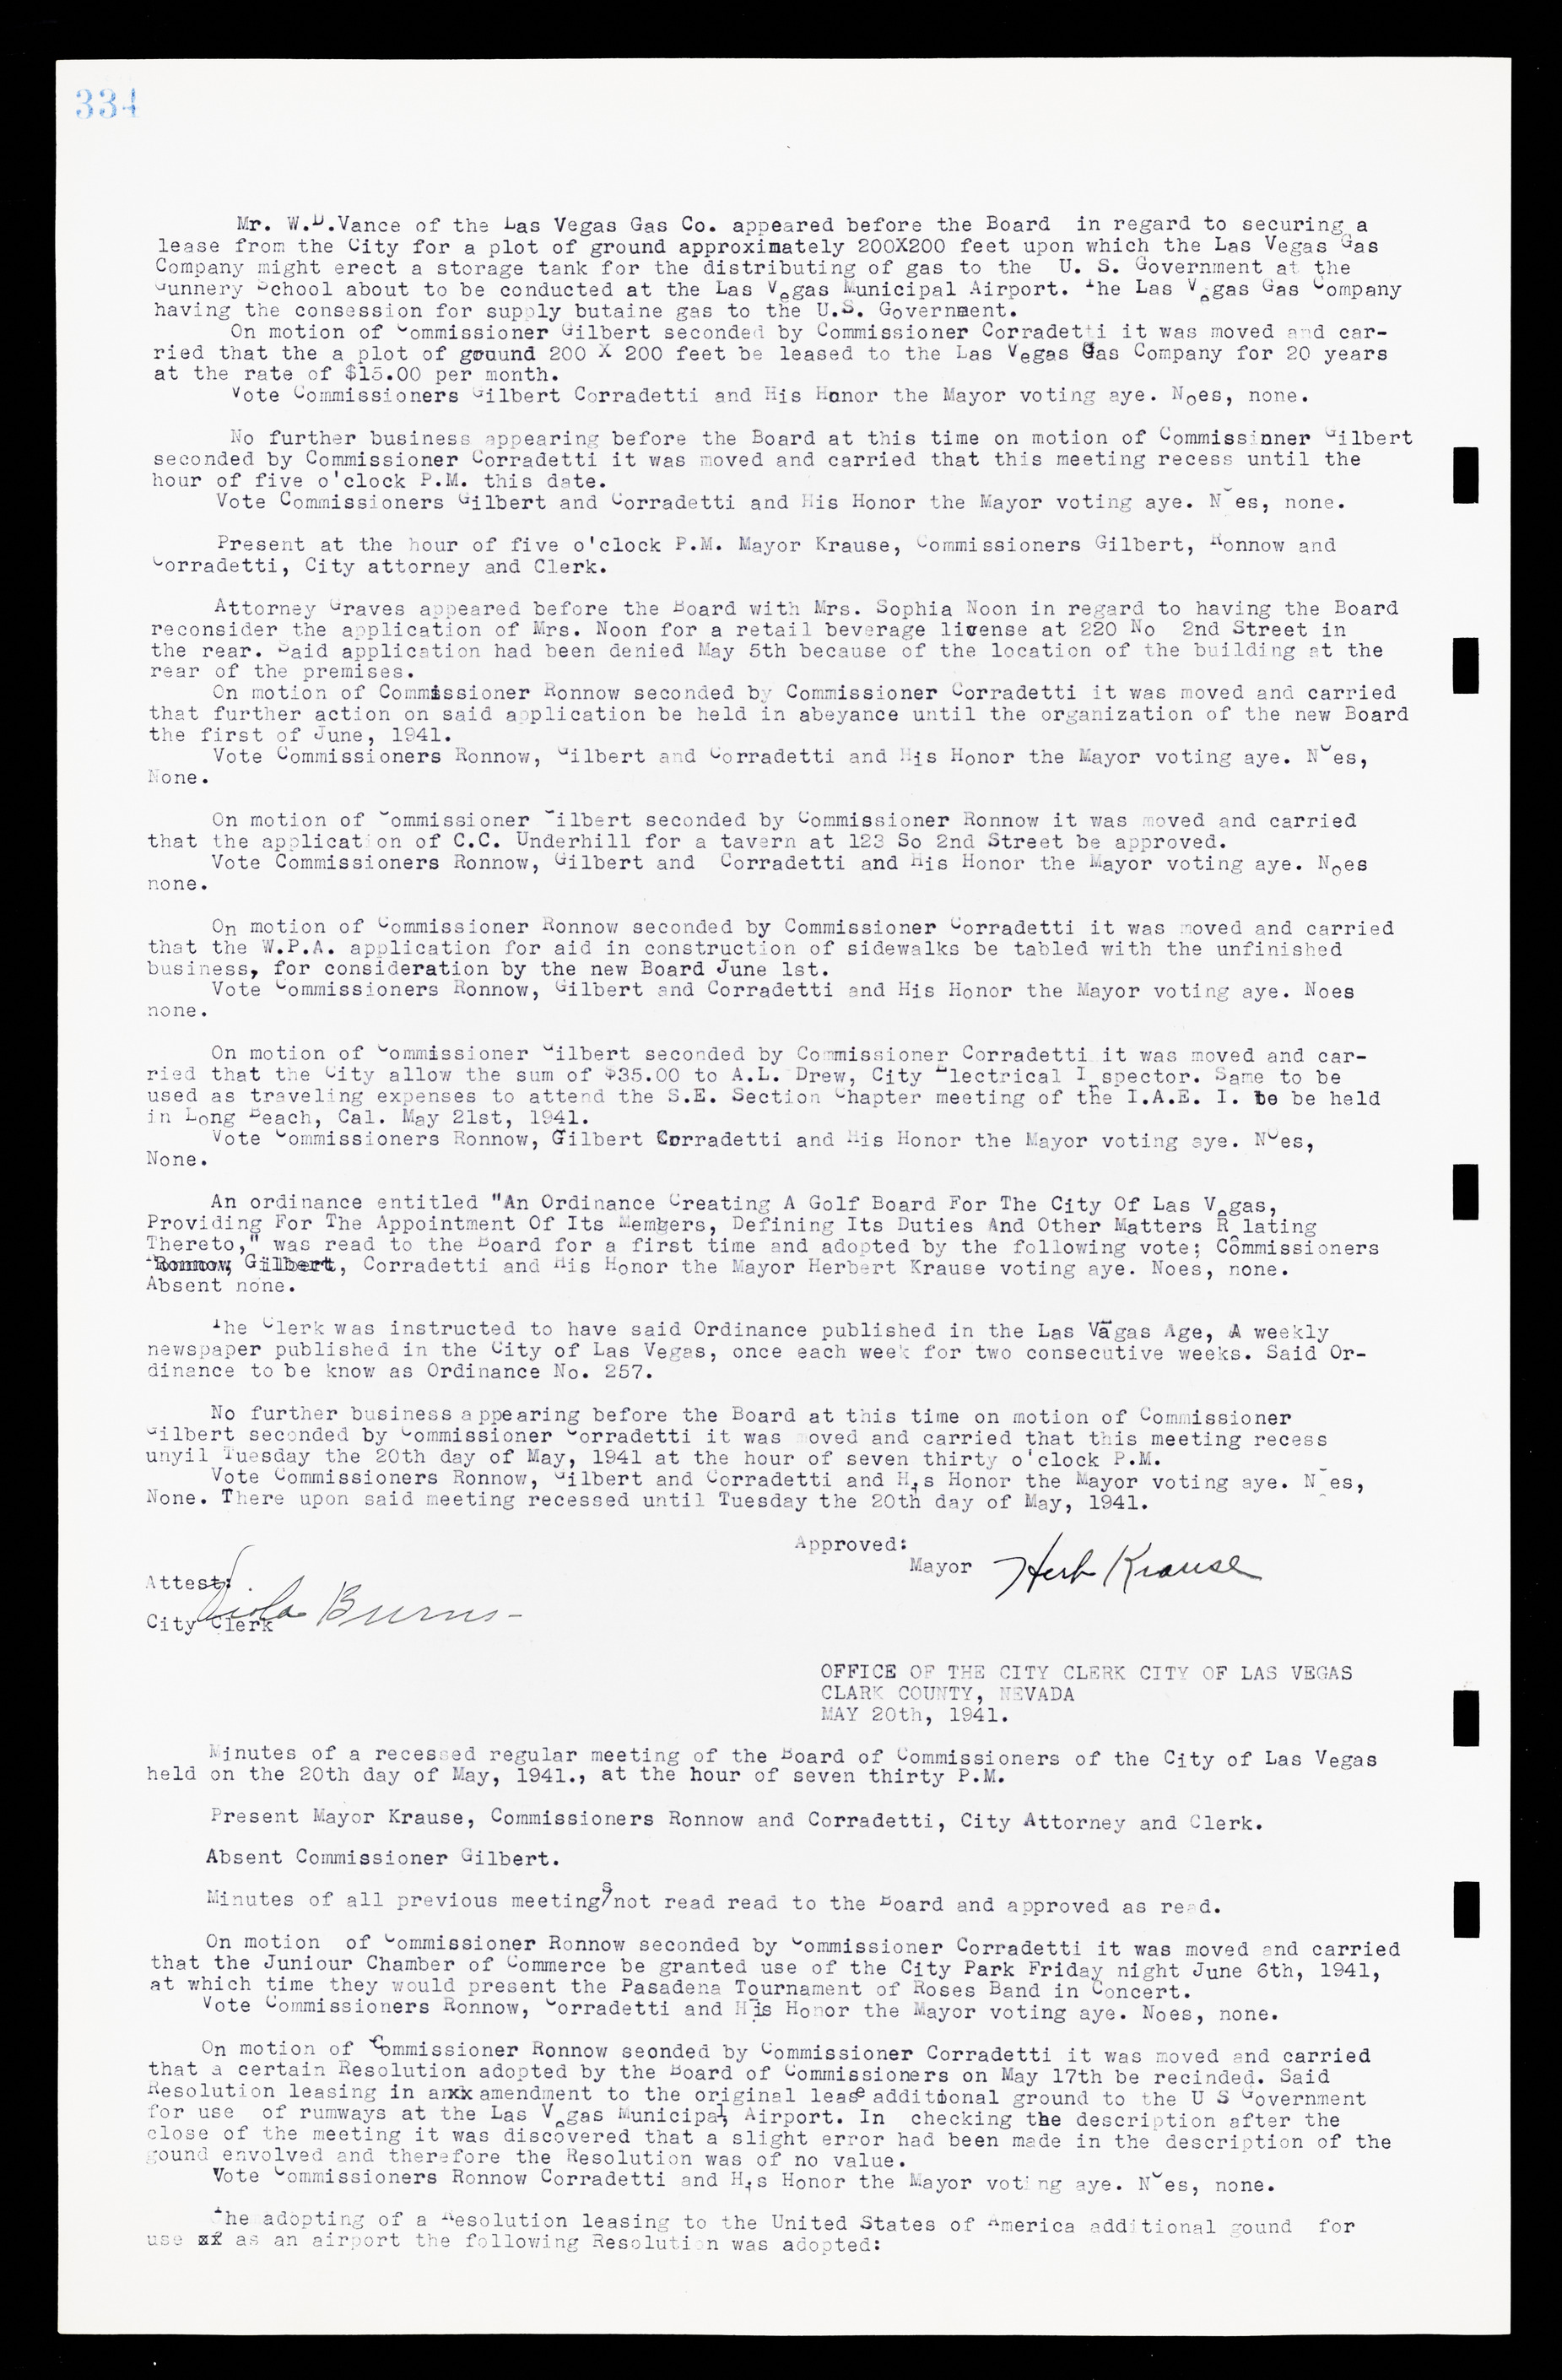 Las Vegas City Commission Minutes, February 17, 1937 to August 4, 1942, lvc000004-358